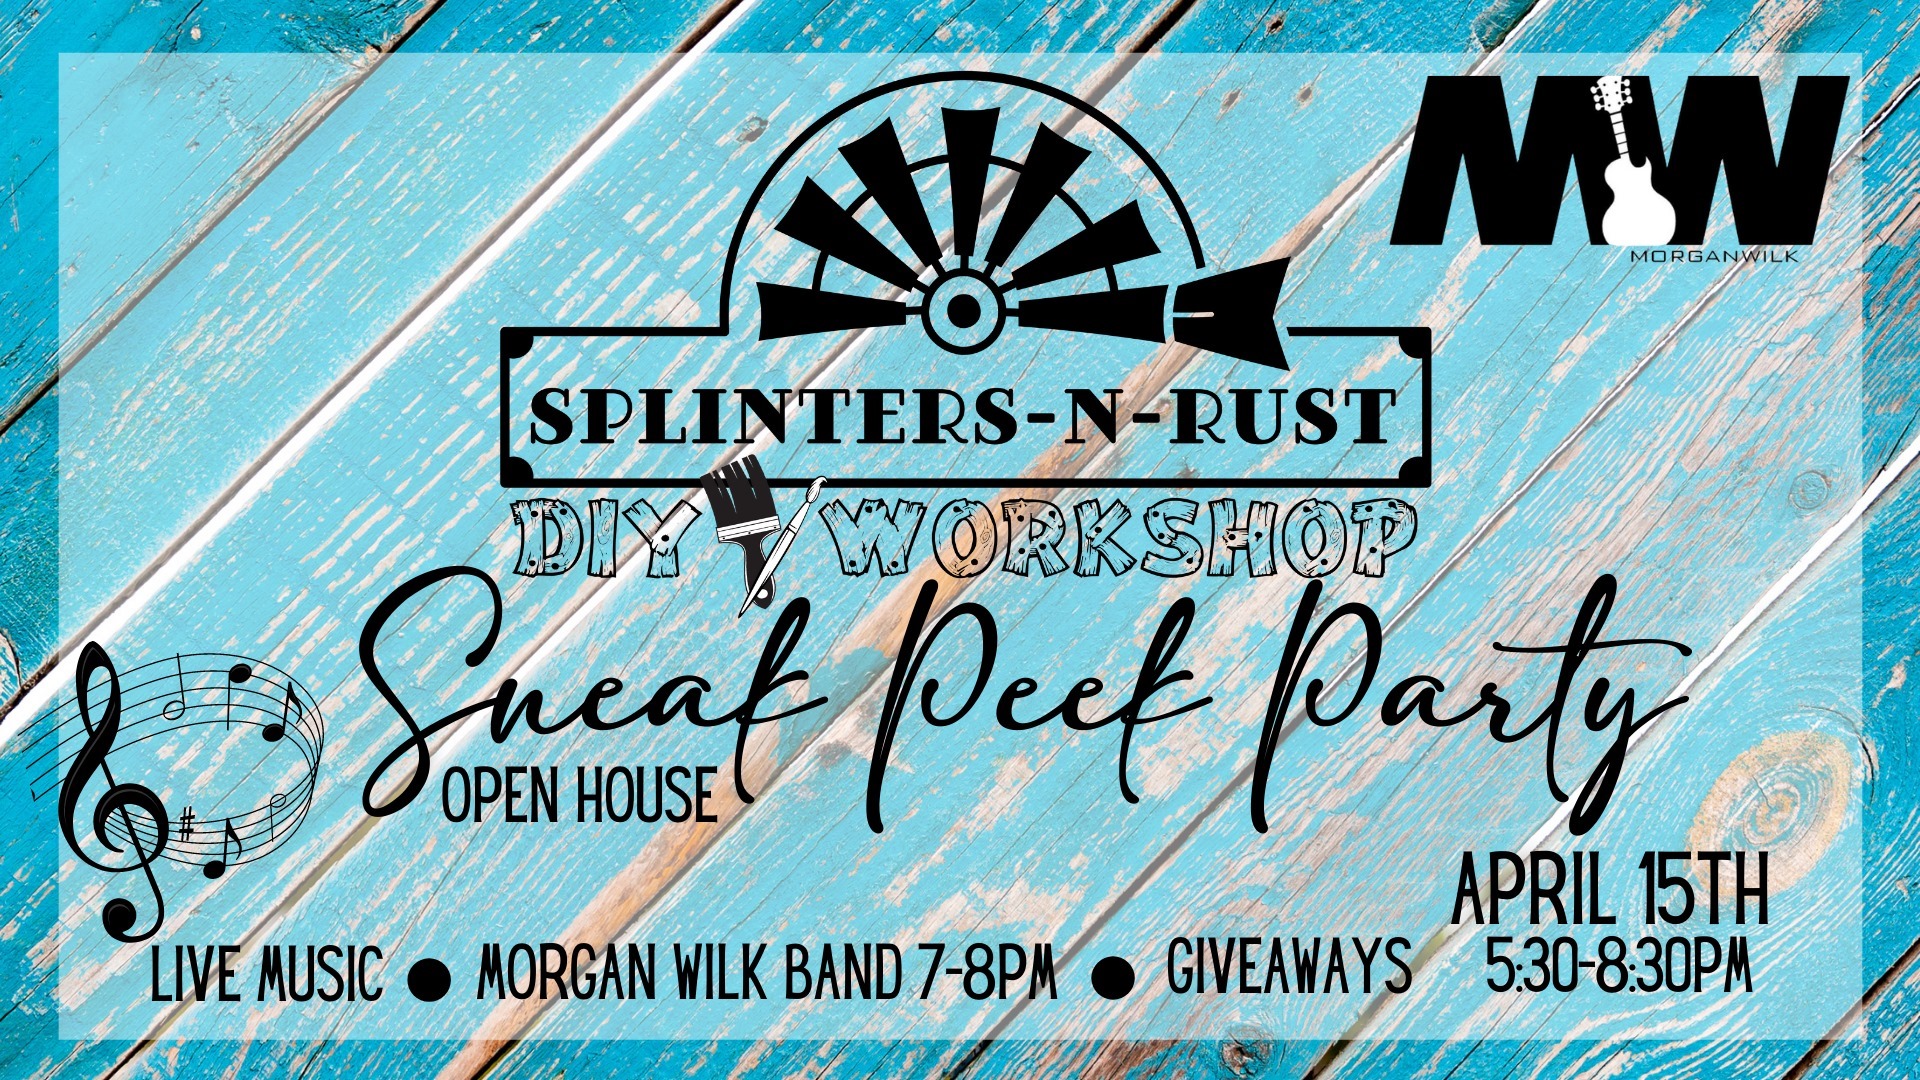 Event Promo Photo For Splinters-N-Rust 'Sneak Peek' Party Event